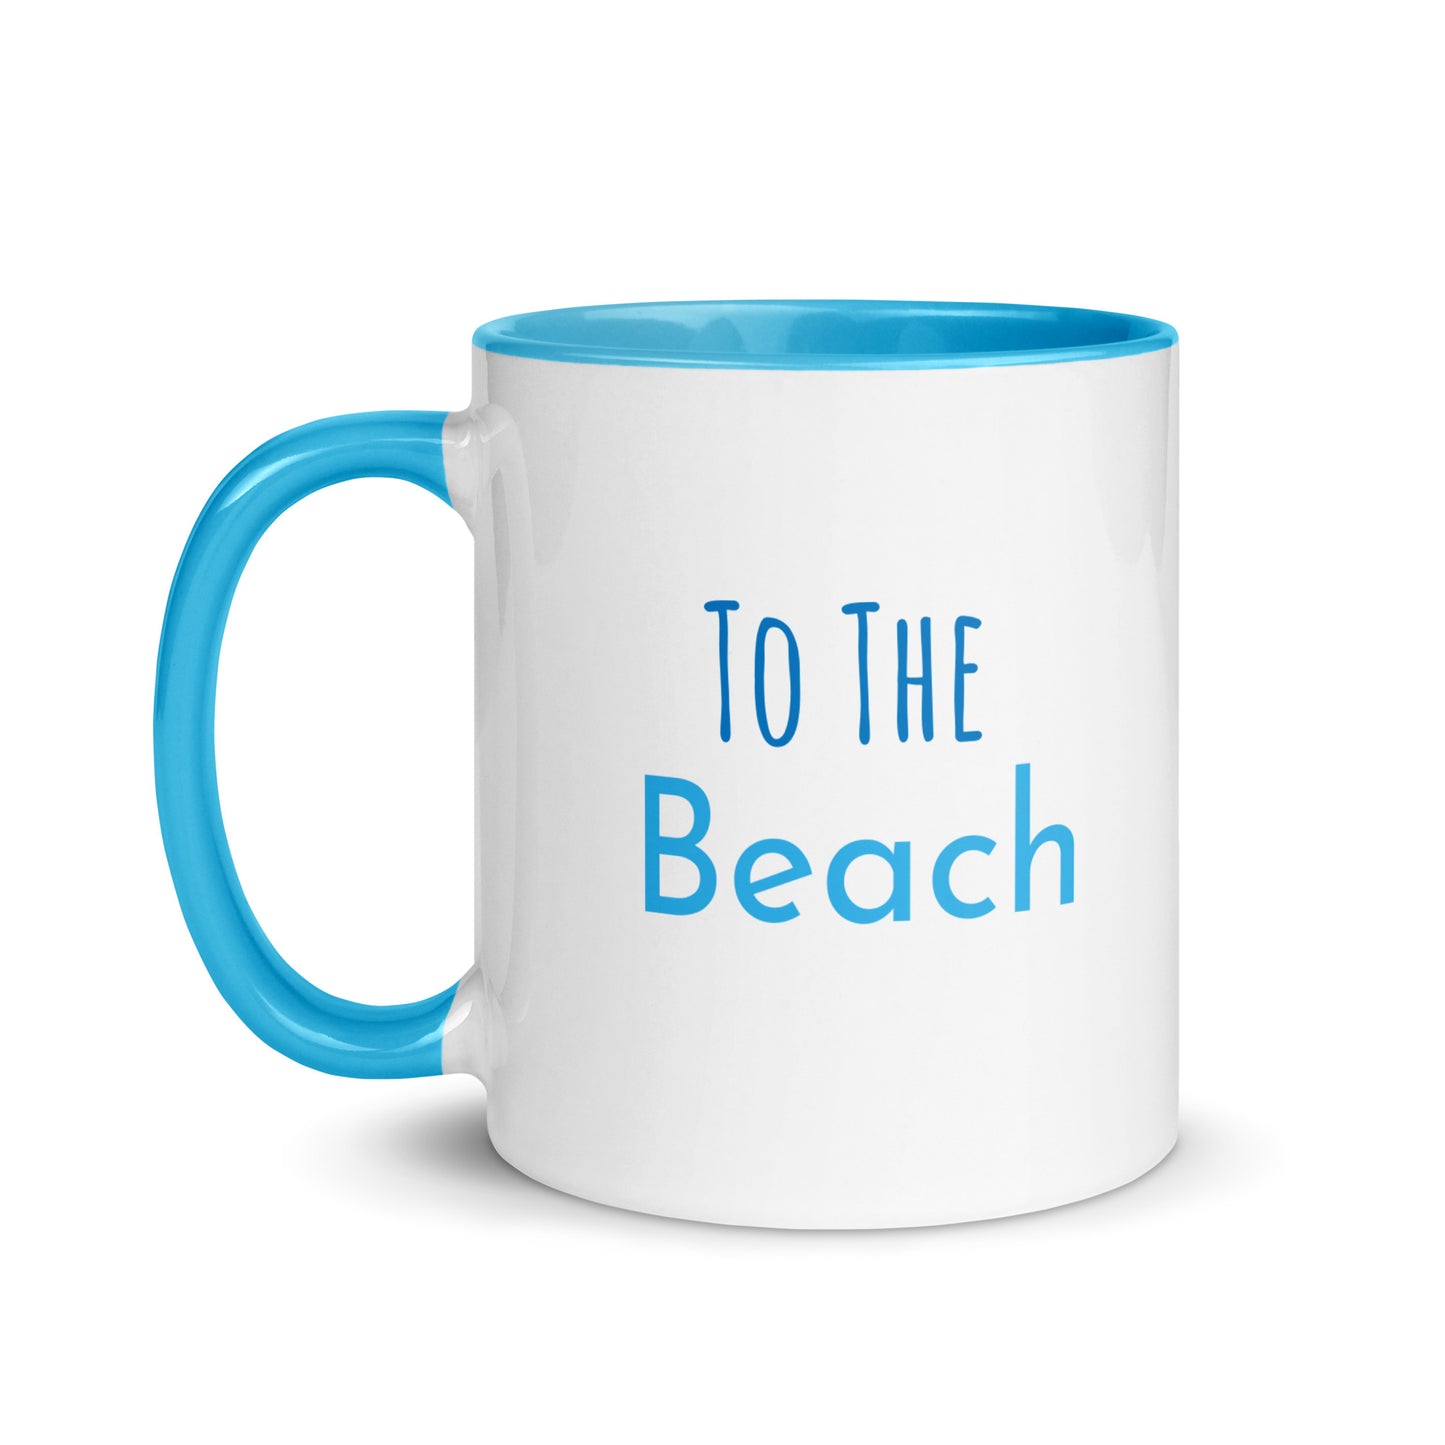 To The Beach Mug with Color Inside